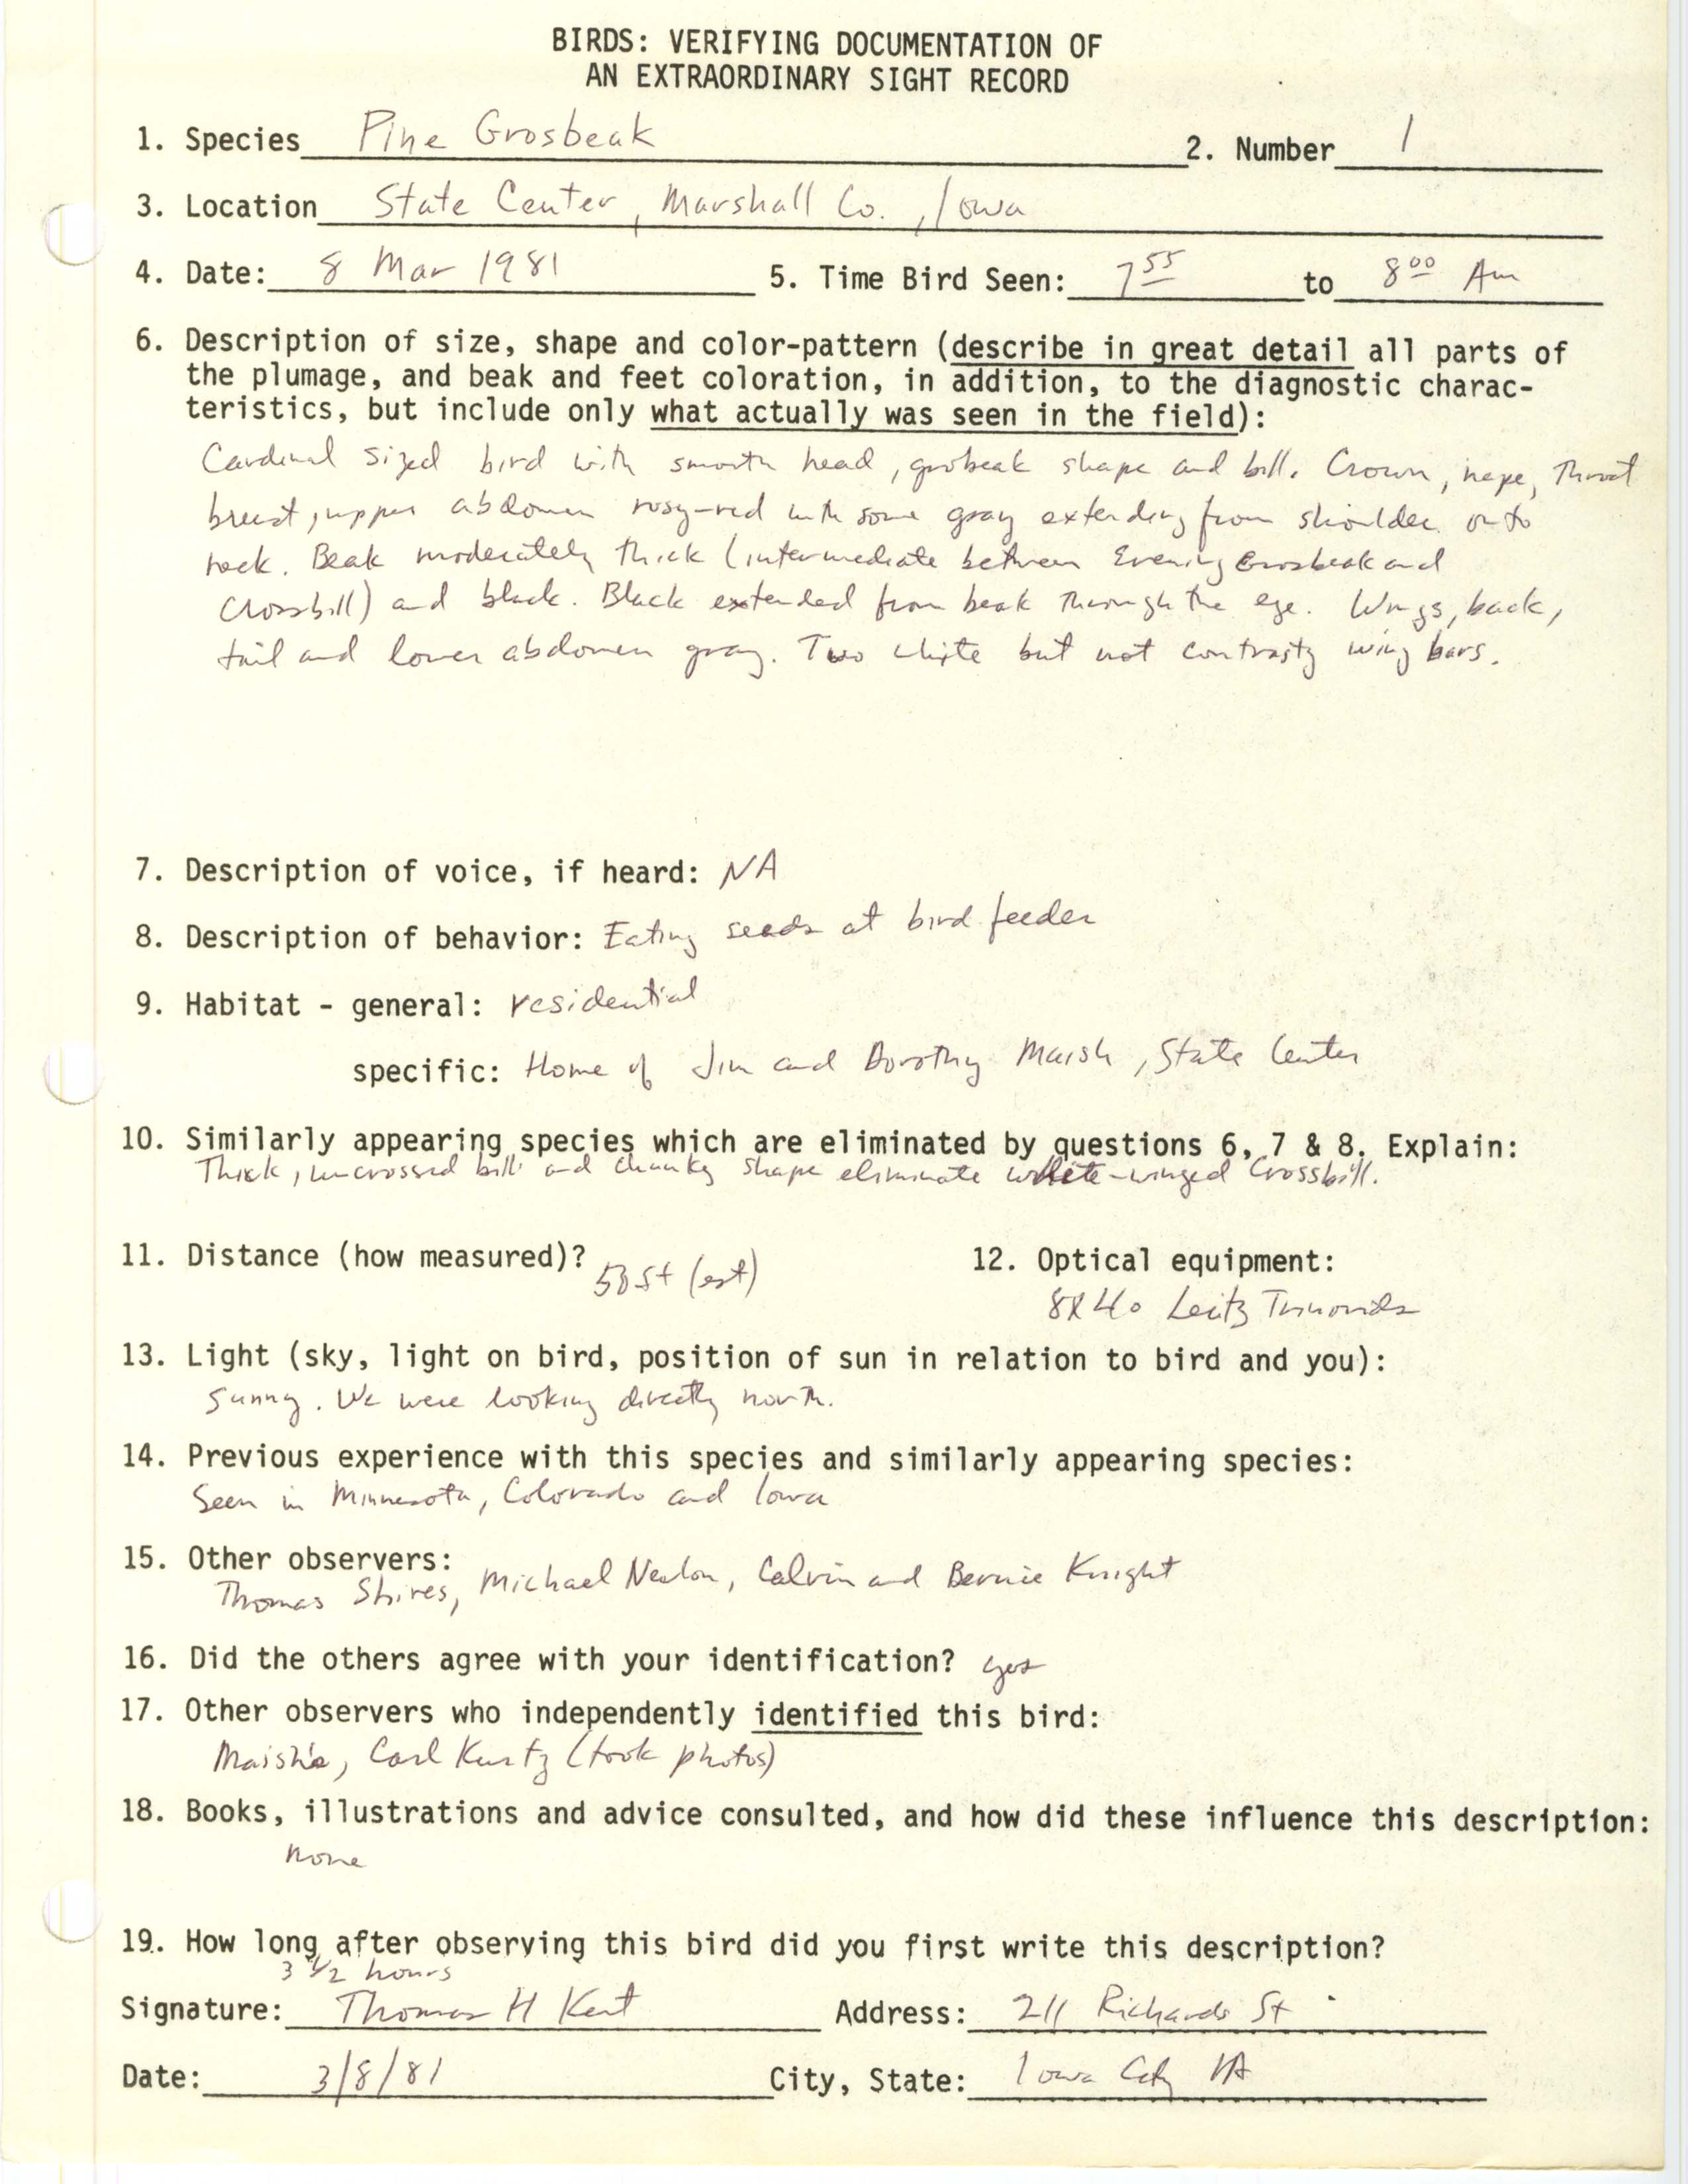 Rare bird documentation form for Pine Grosbeak at State Center, 1981